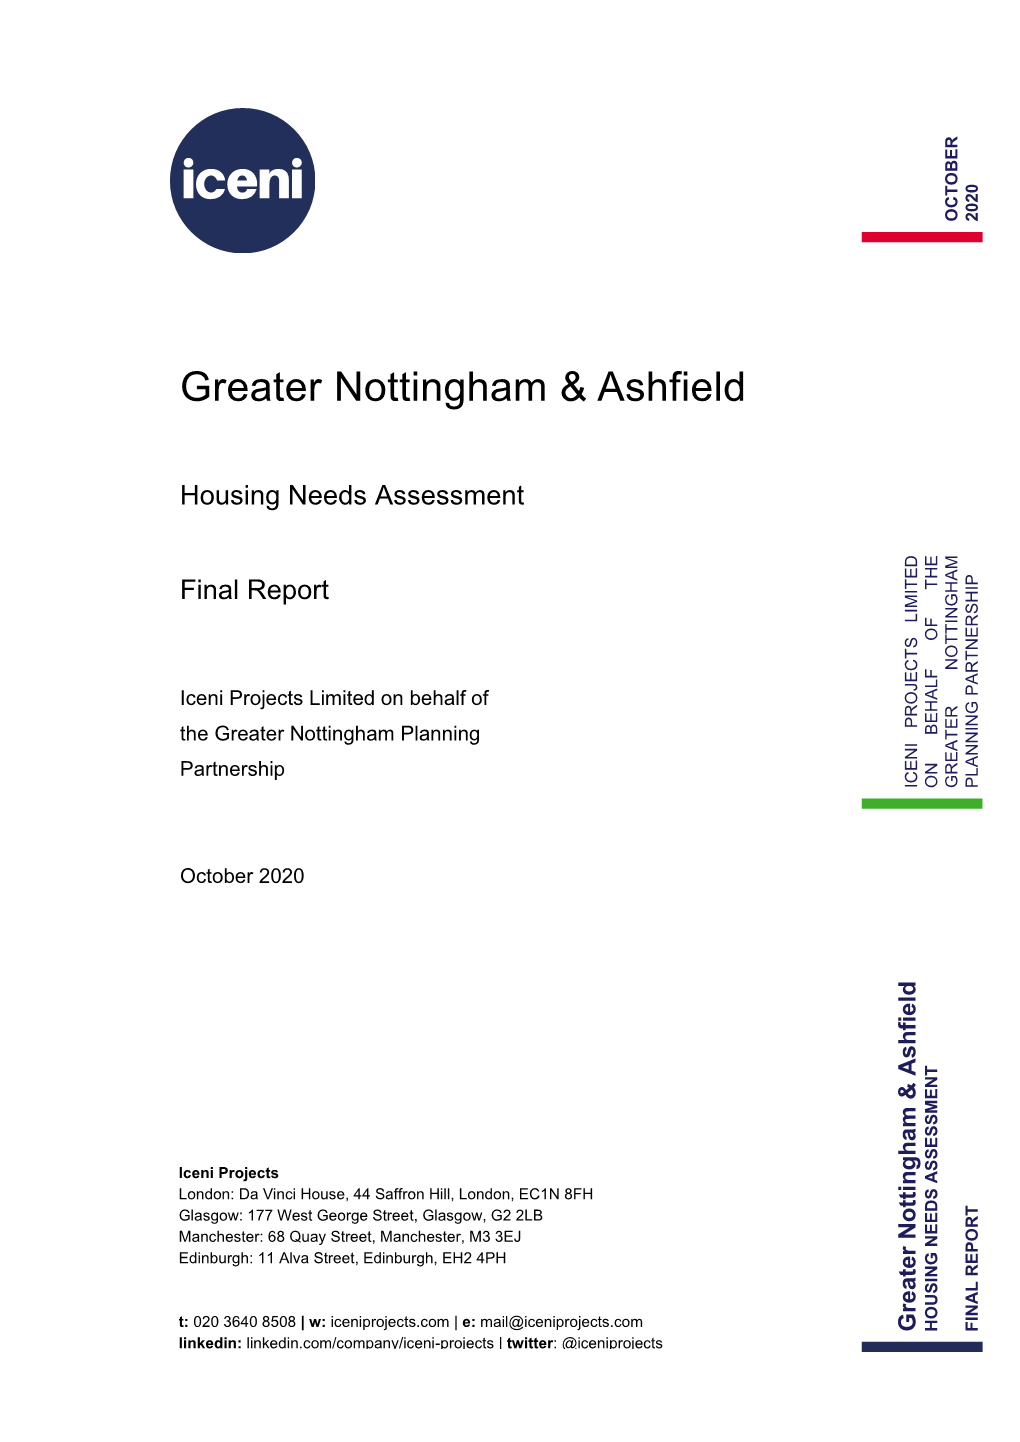 Greater Nottingham and Ashfield Housing Needs Assessment 2020